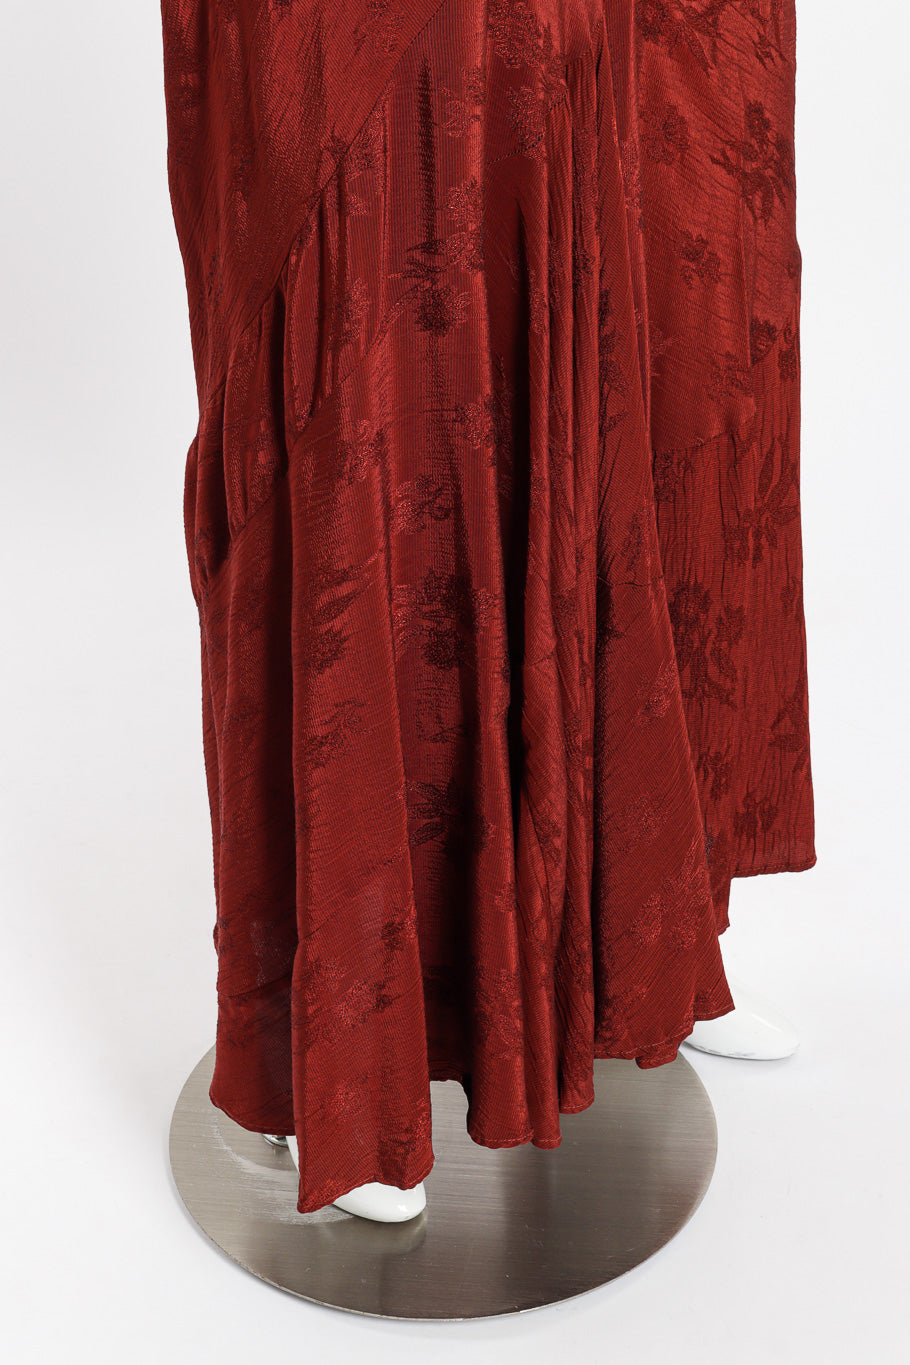 Emboridered bias gown by Les Habitudes on mannequin hem close @recessla